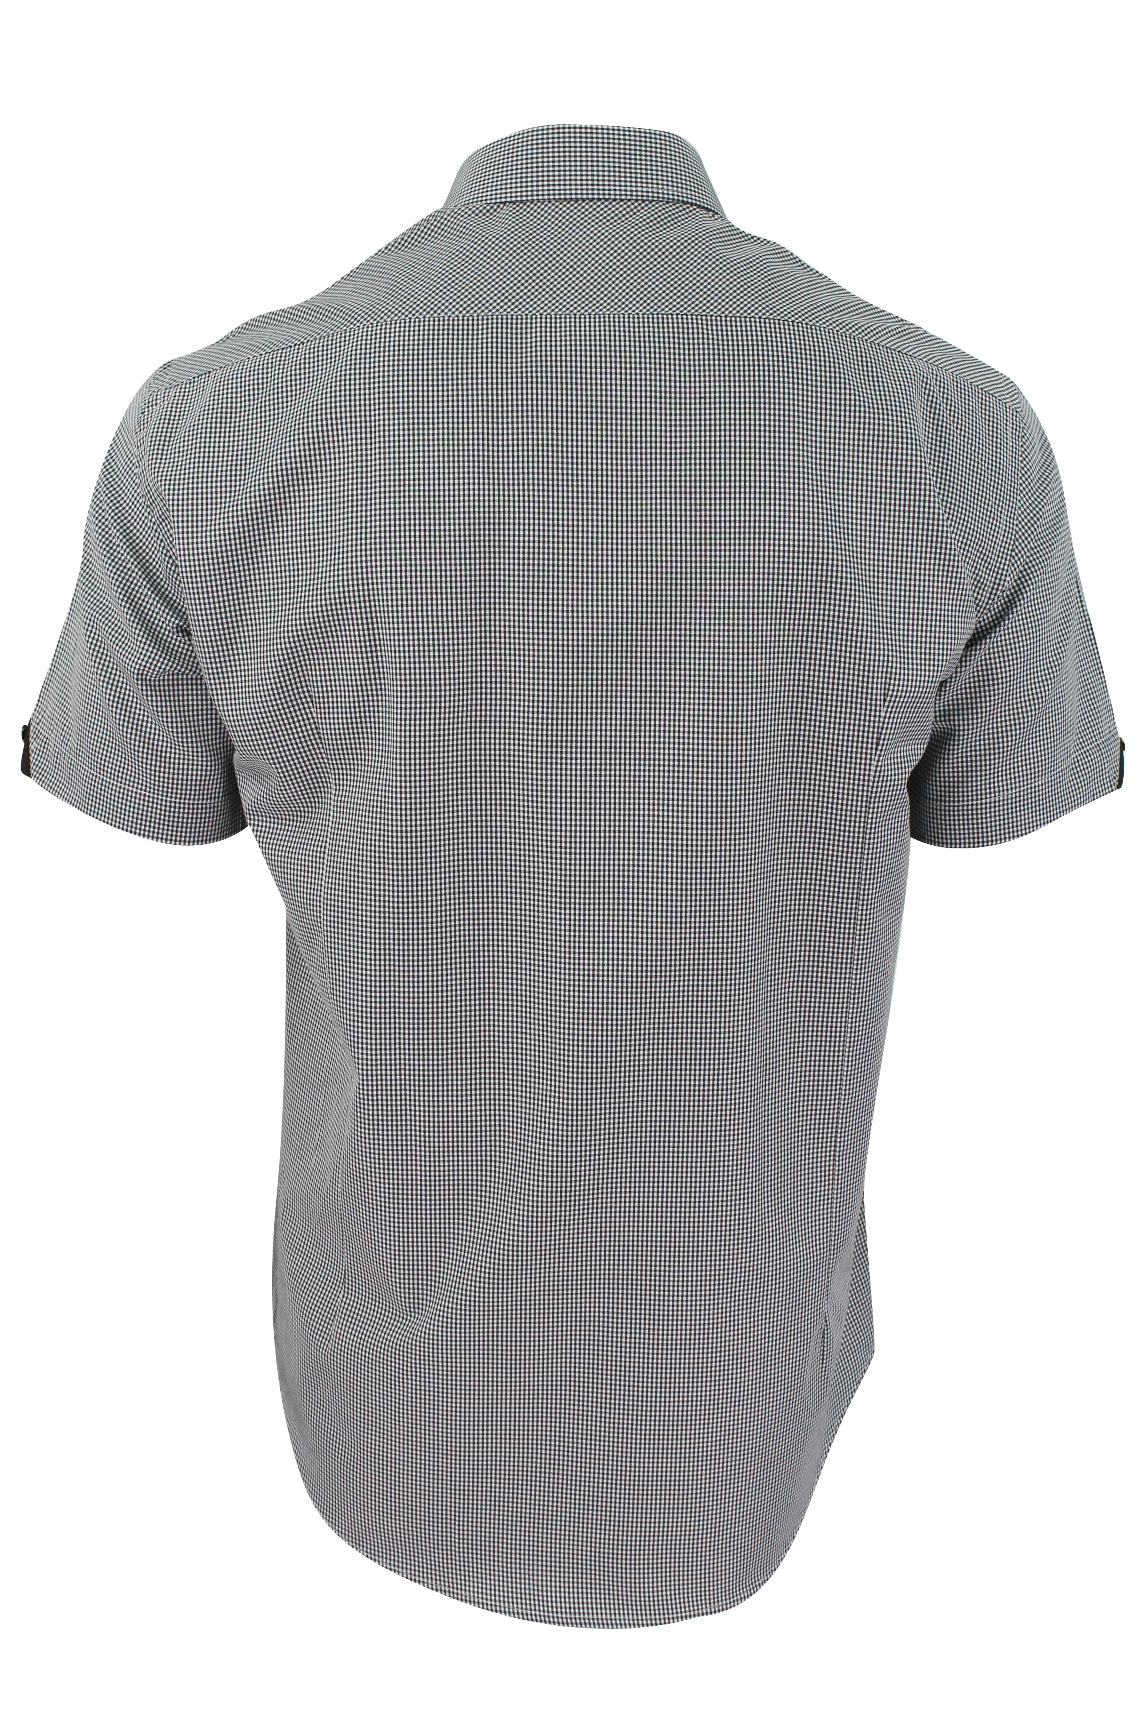 Mens Short Sleeved Shirt by Xact Clothing Micro Gingham Check, 03, 1510114, Black